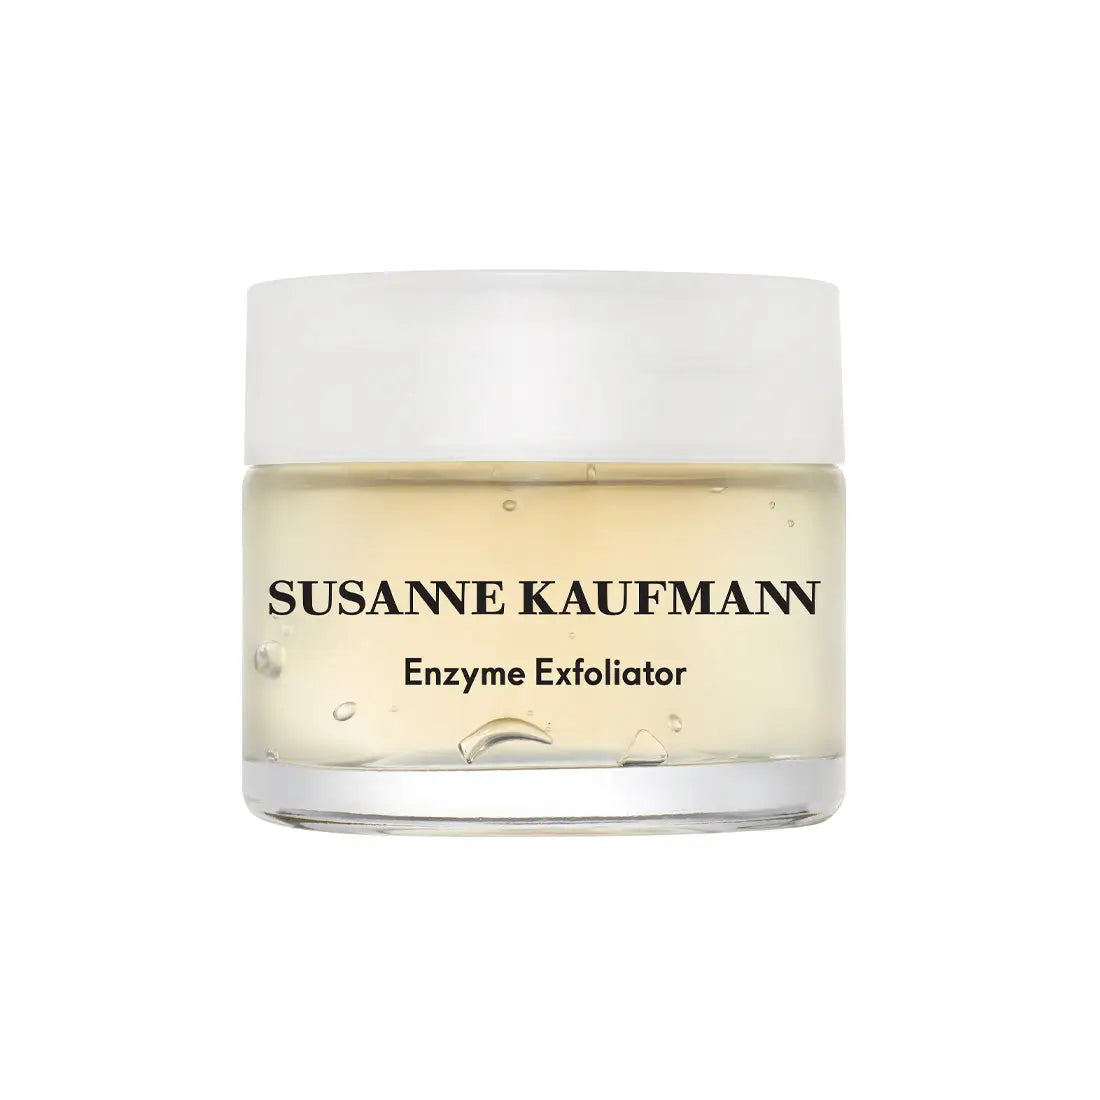 Susanne Kaufmann Enzyme Exfoliator 50ml | ALYAKA USA